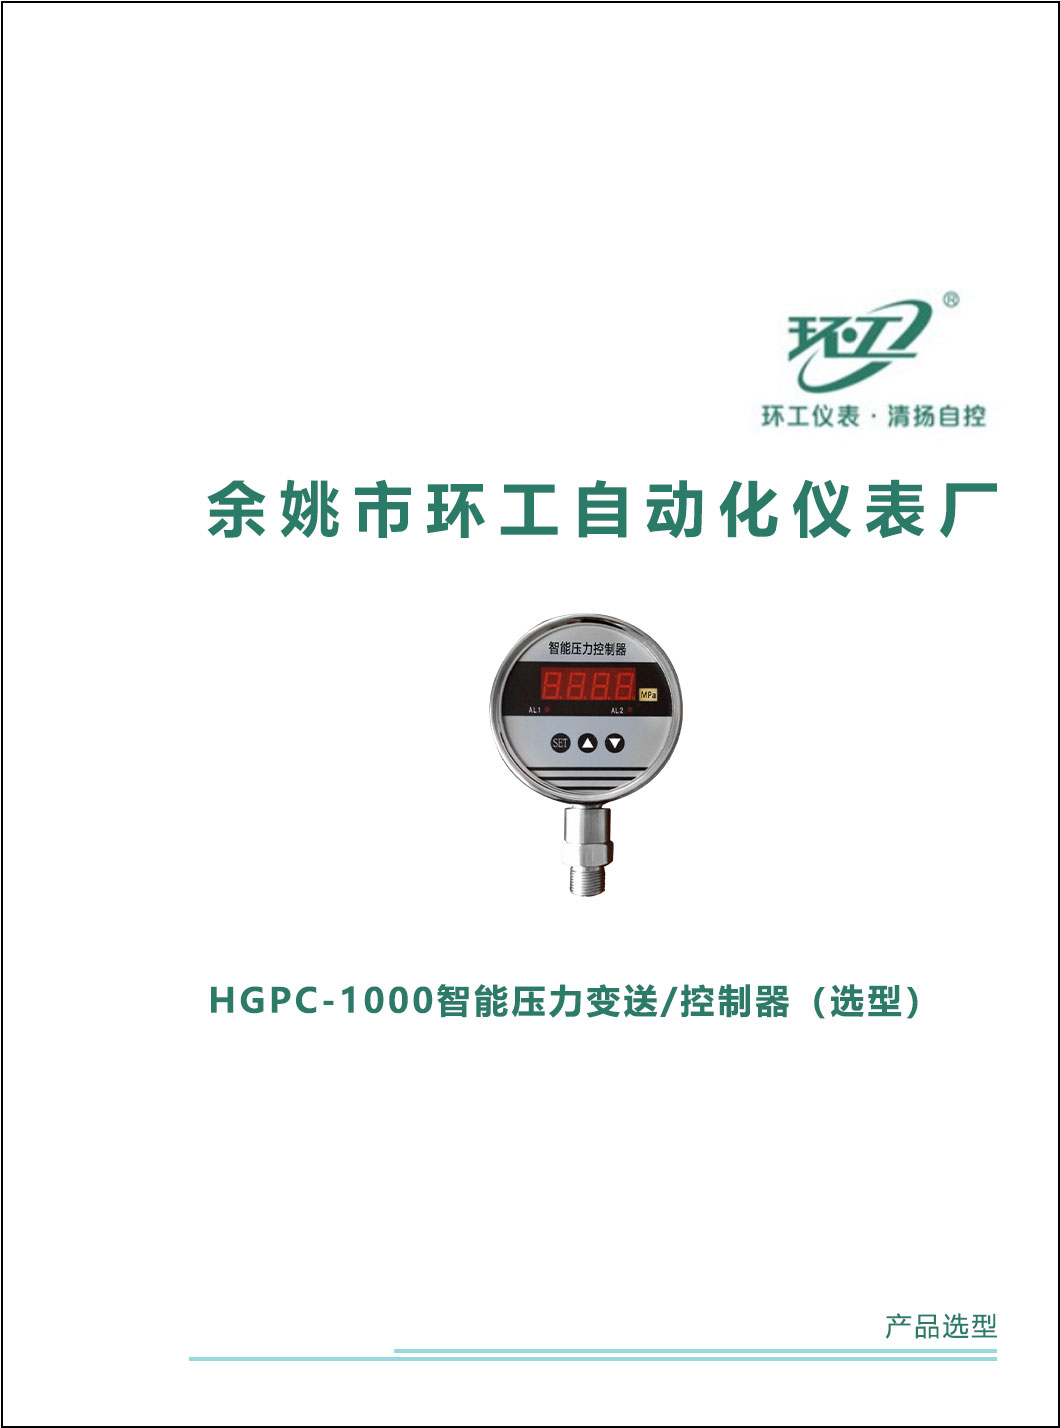 HGPC-1000智能压力变送/控制器-环工仪表-清扬自控